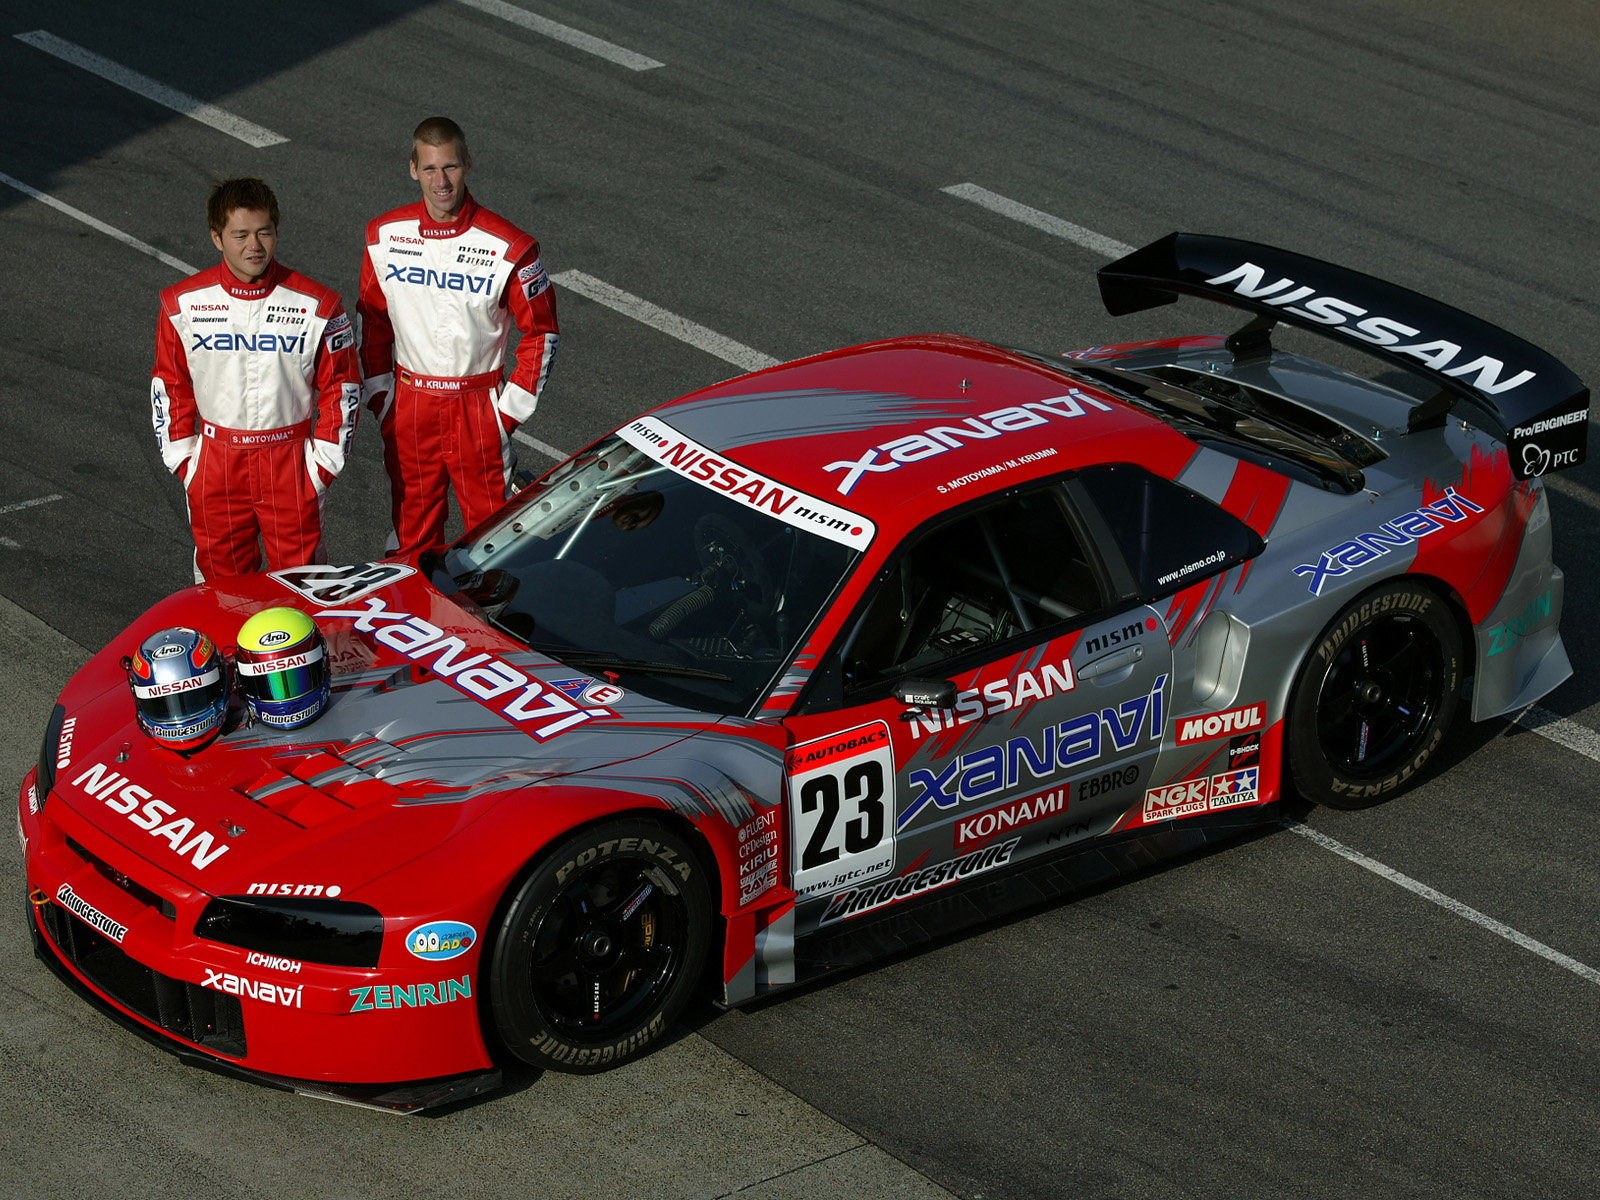 1999, Nissan, Skyline, Gt r, Jgtc, Bnr34, Race, Racing Wallpaper